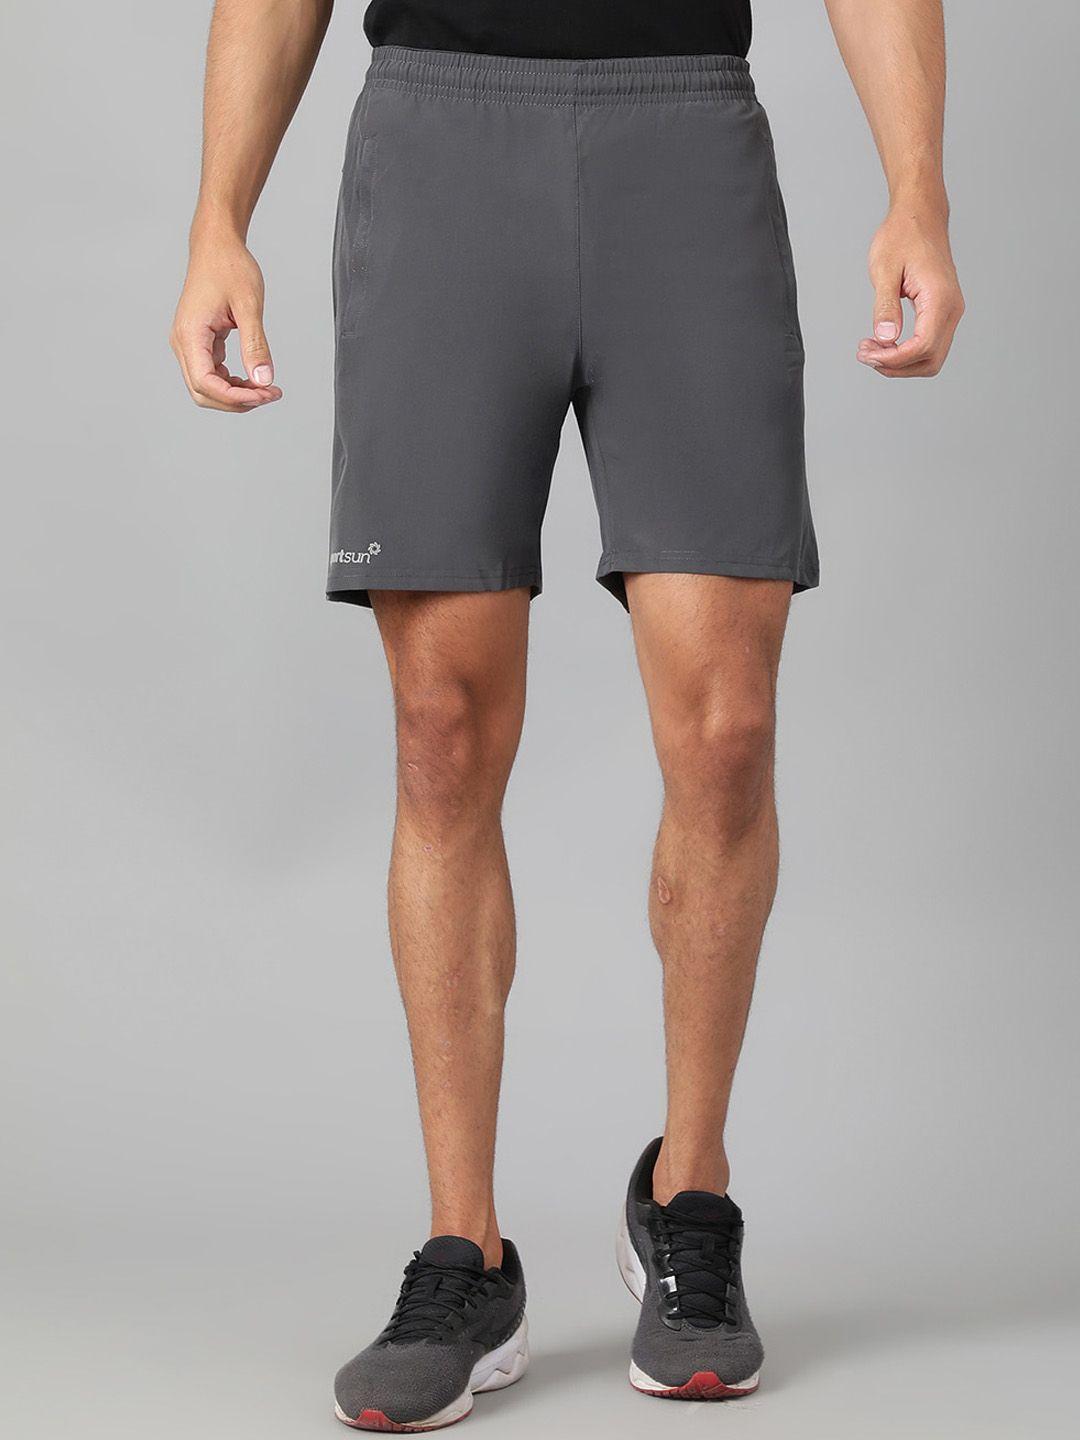 sport sun men mid-rise above knee sports shorts